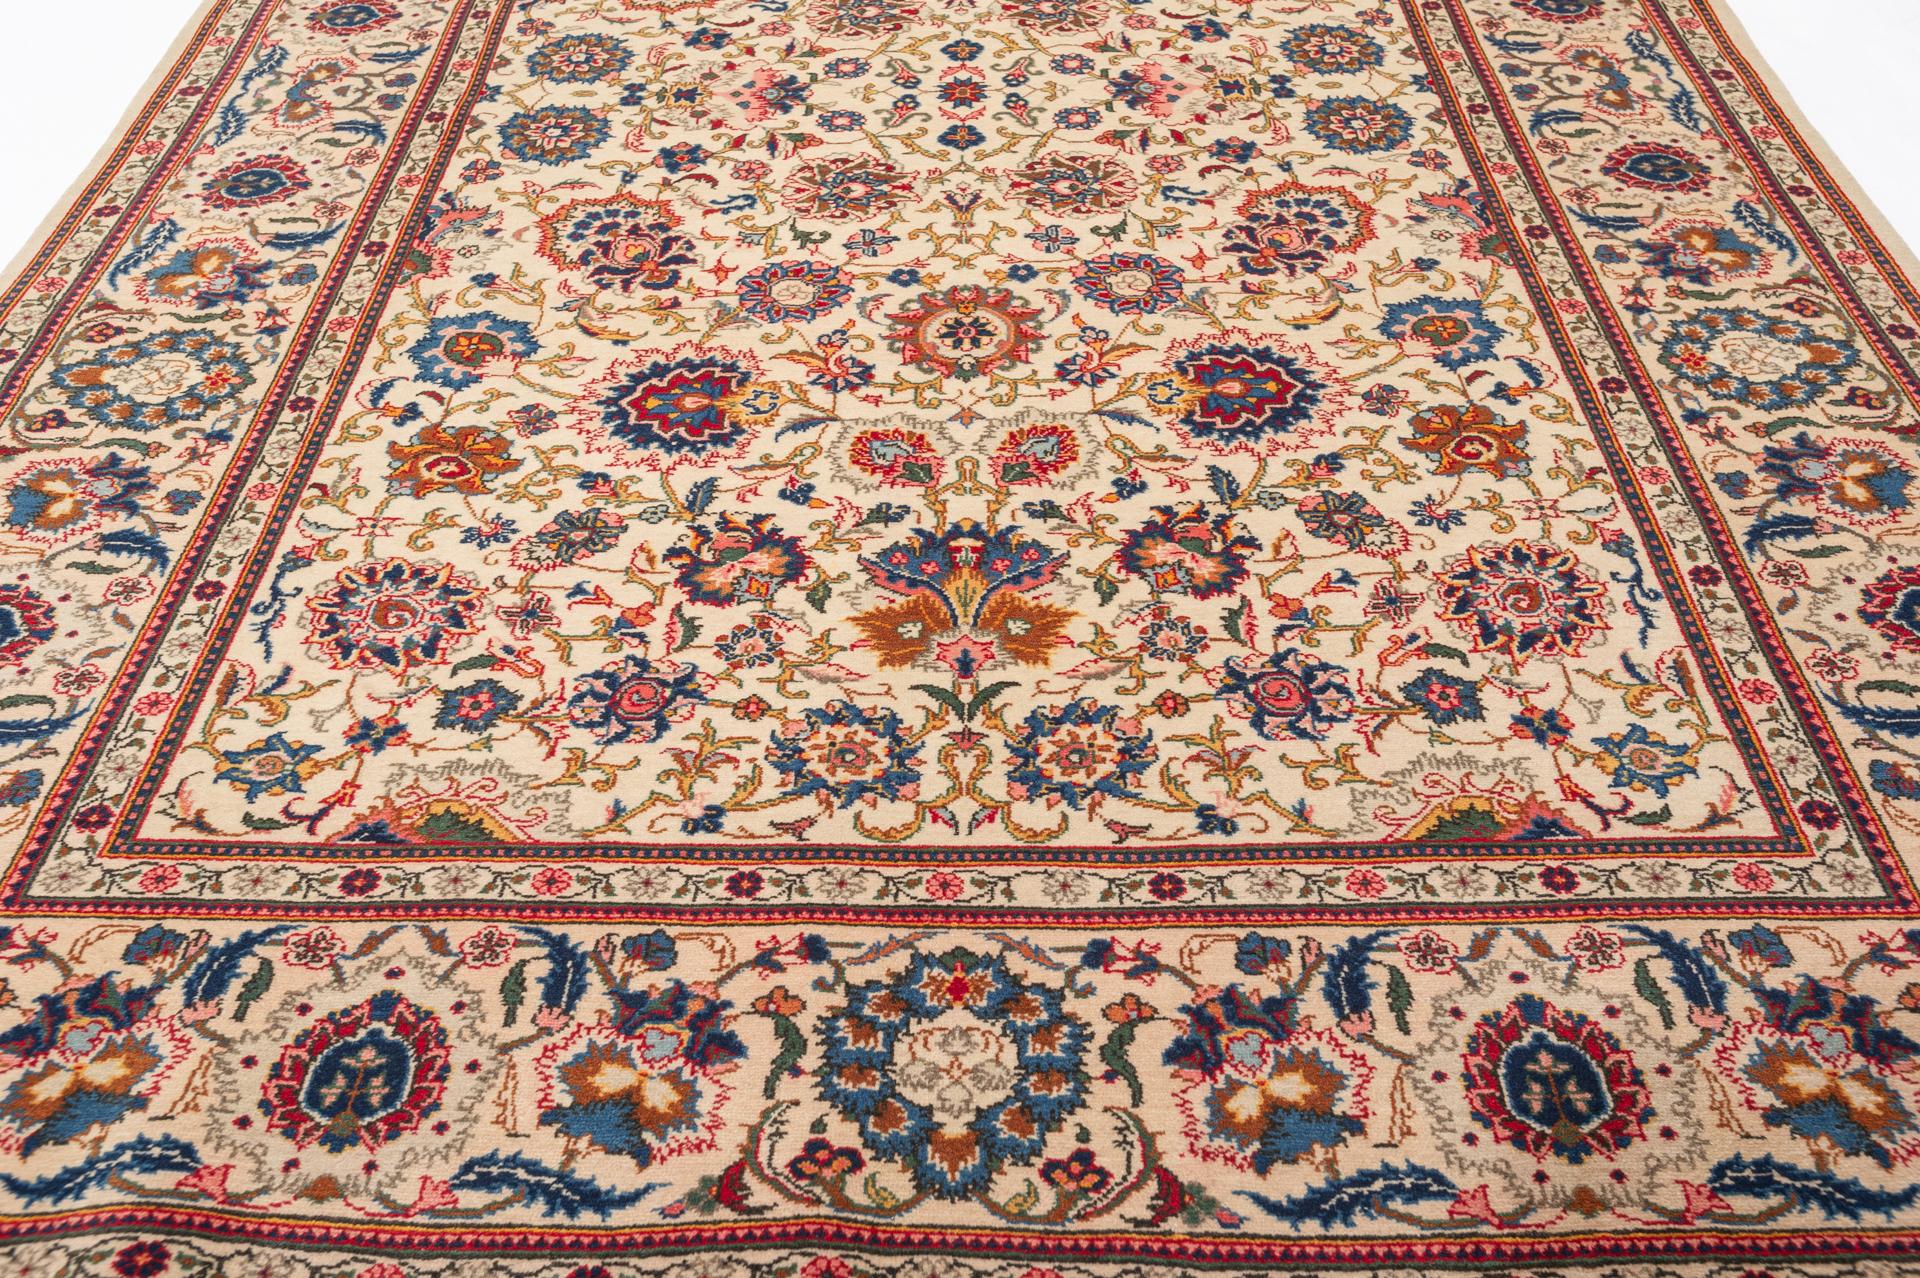 Central Asian Vintage Rare Ivory Oriental Carpet For Sale